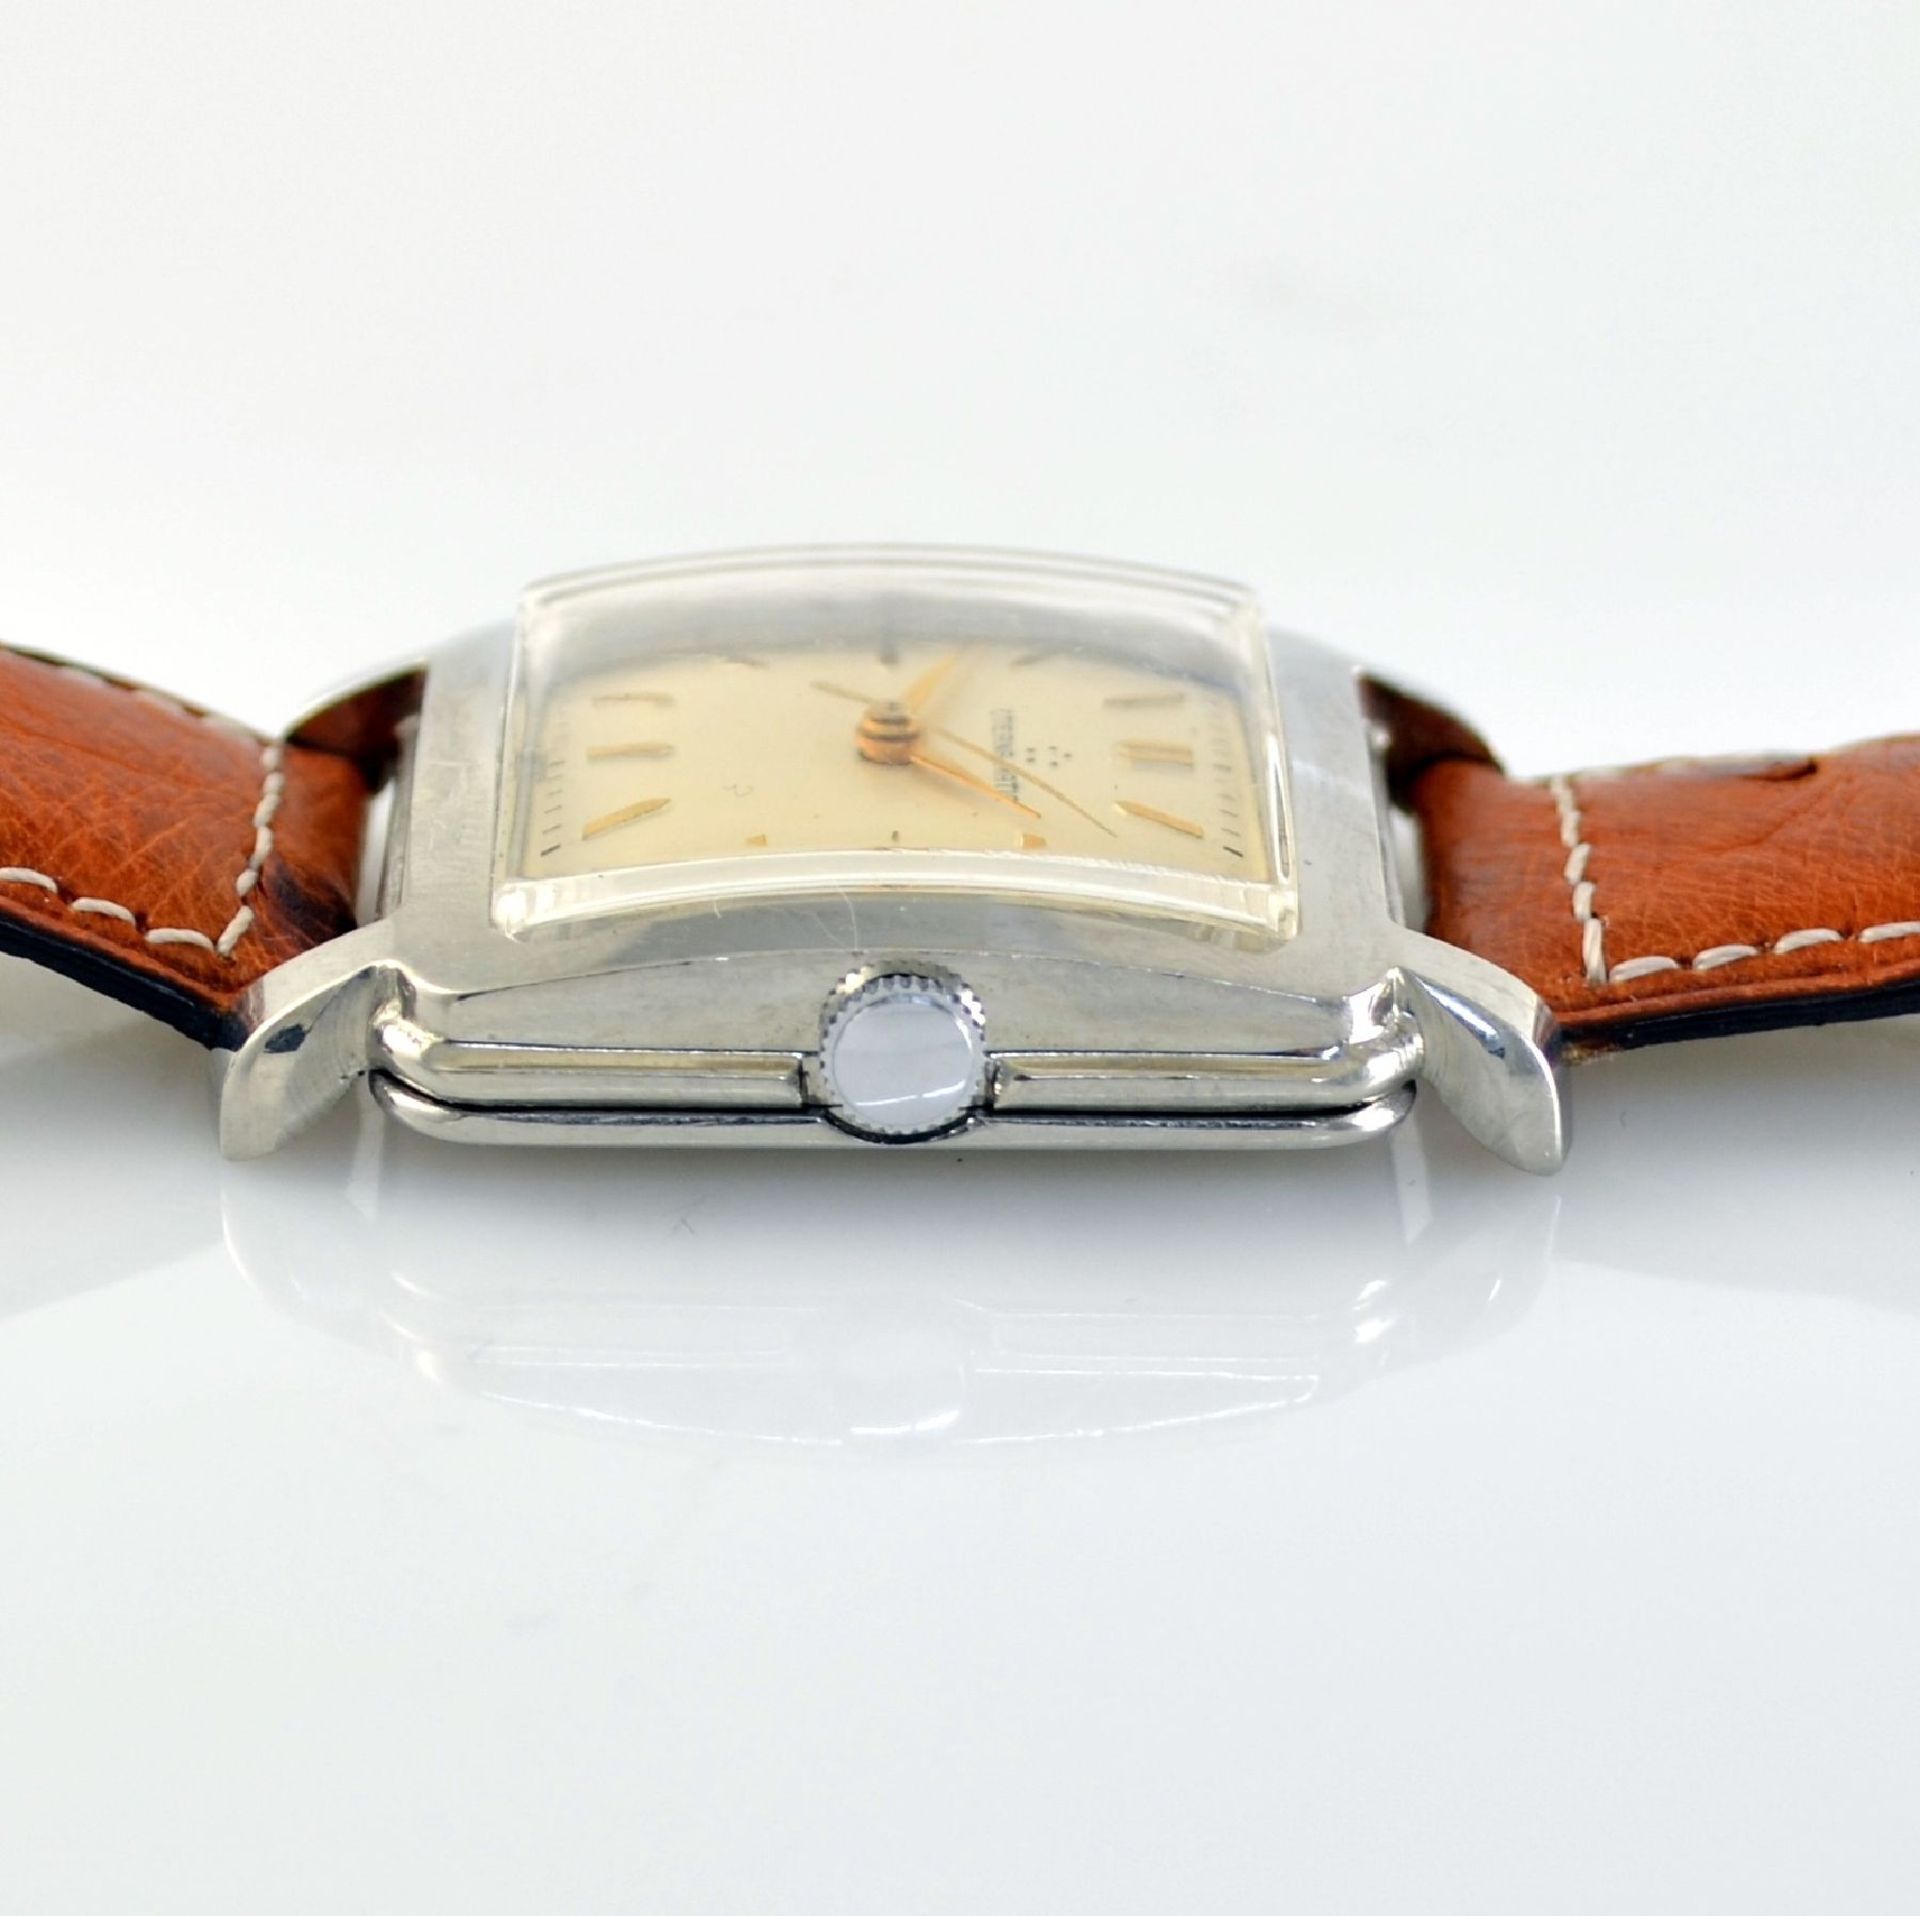 ETERNA-MATIC rare square wristwatch in steel, Switzerland around 1955, self winding, pressed down - Bild 4 aus 8